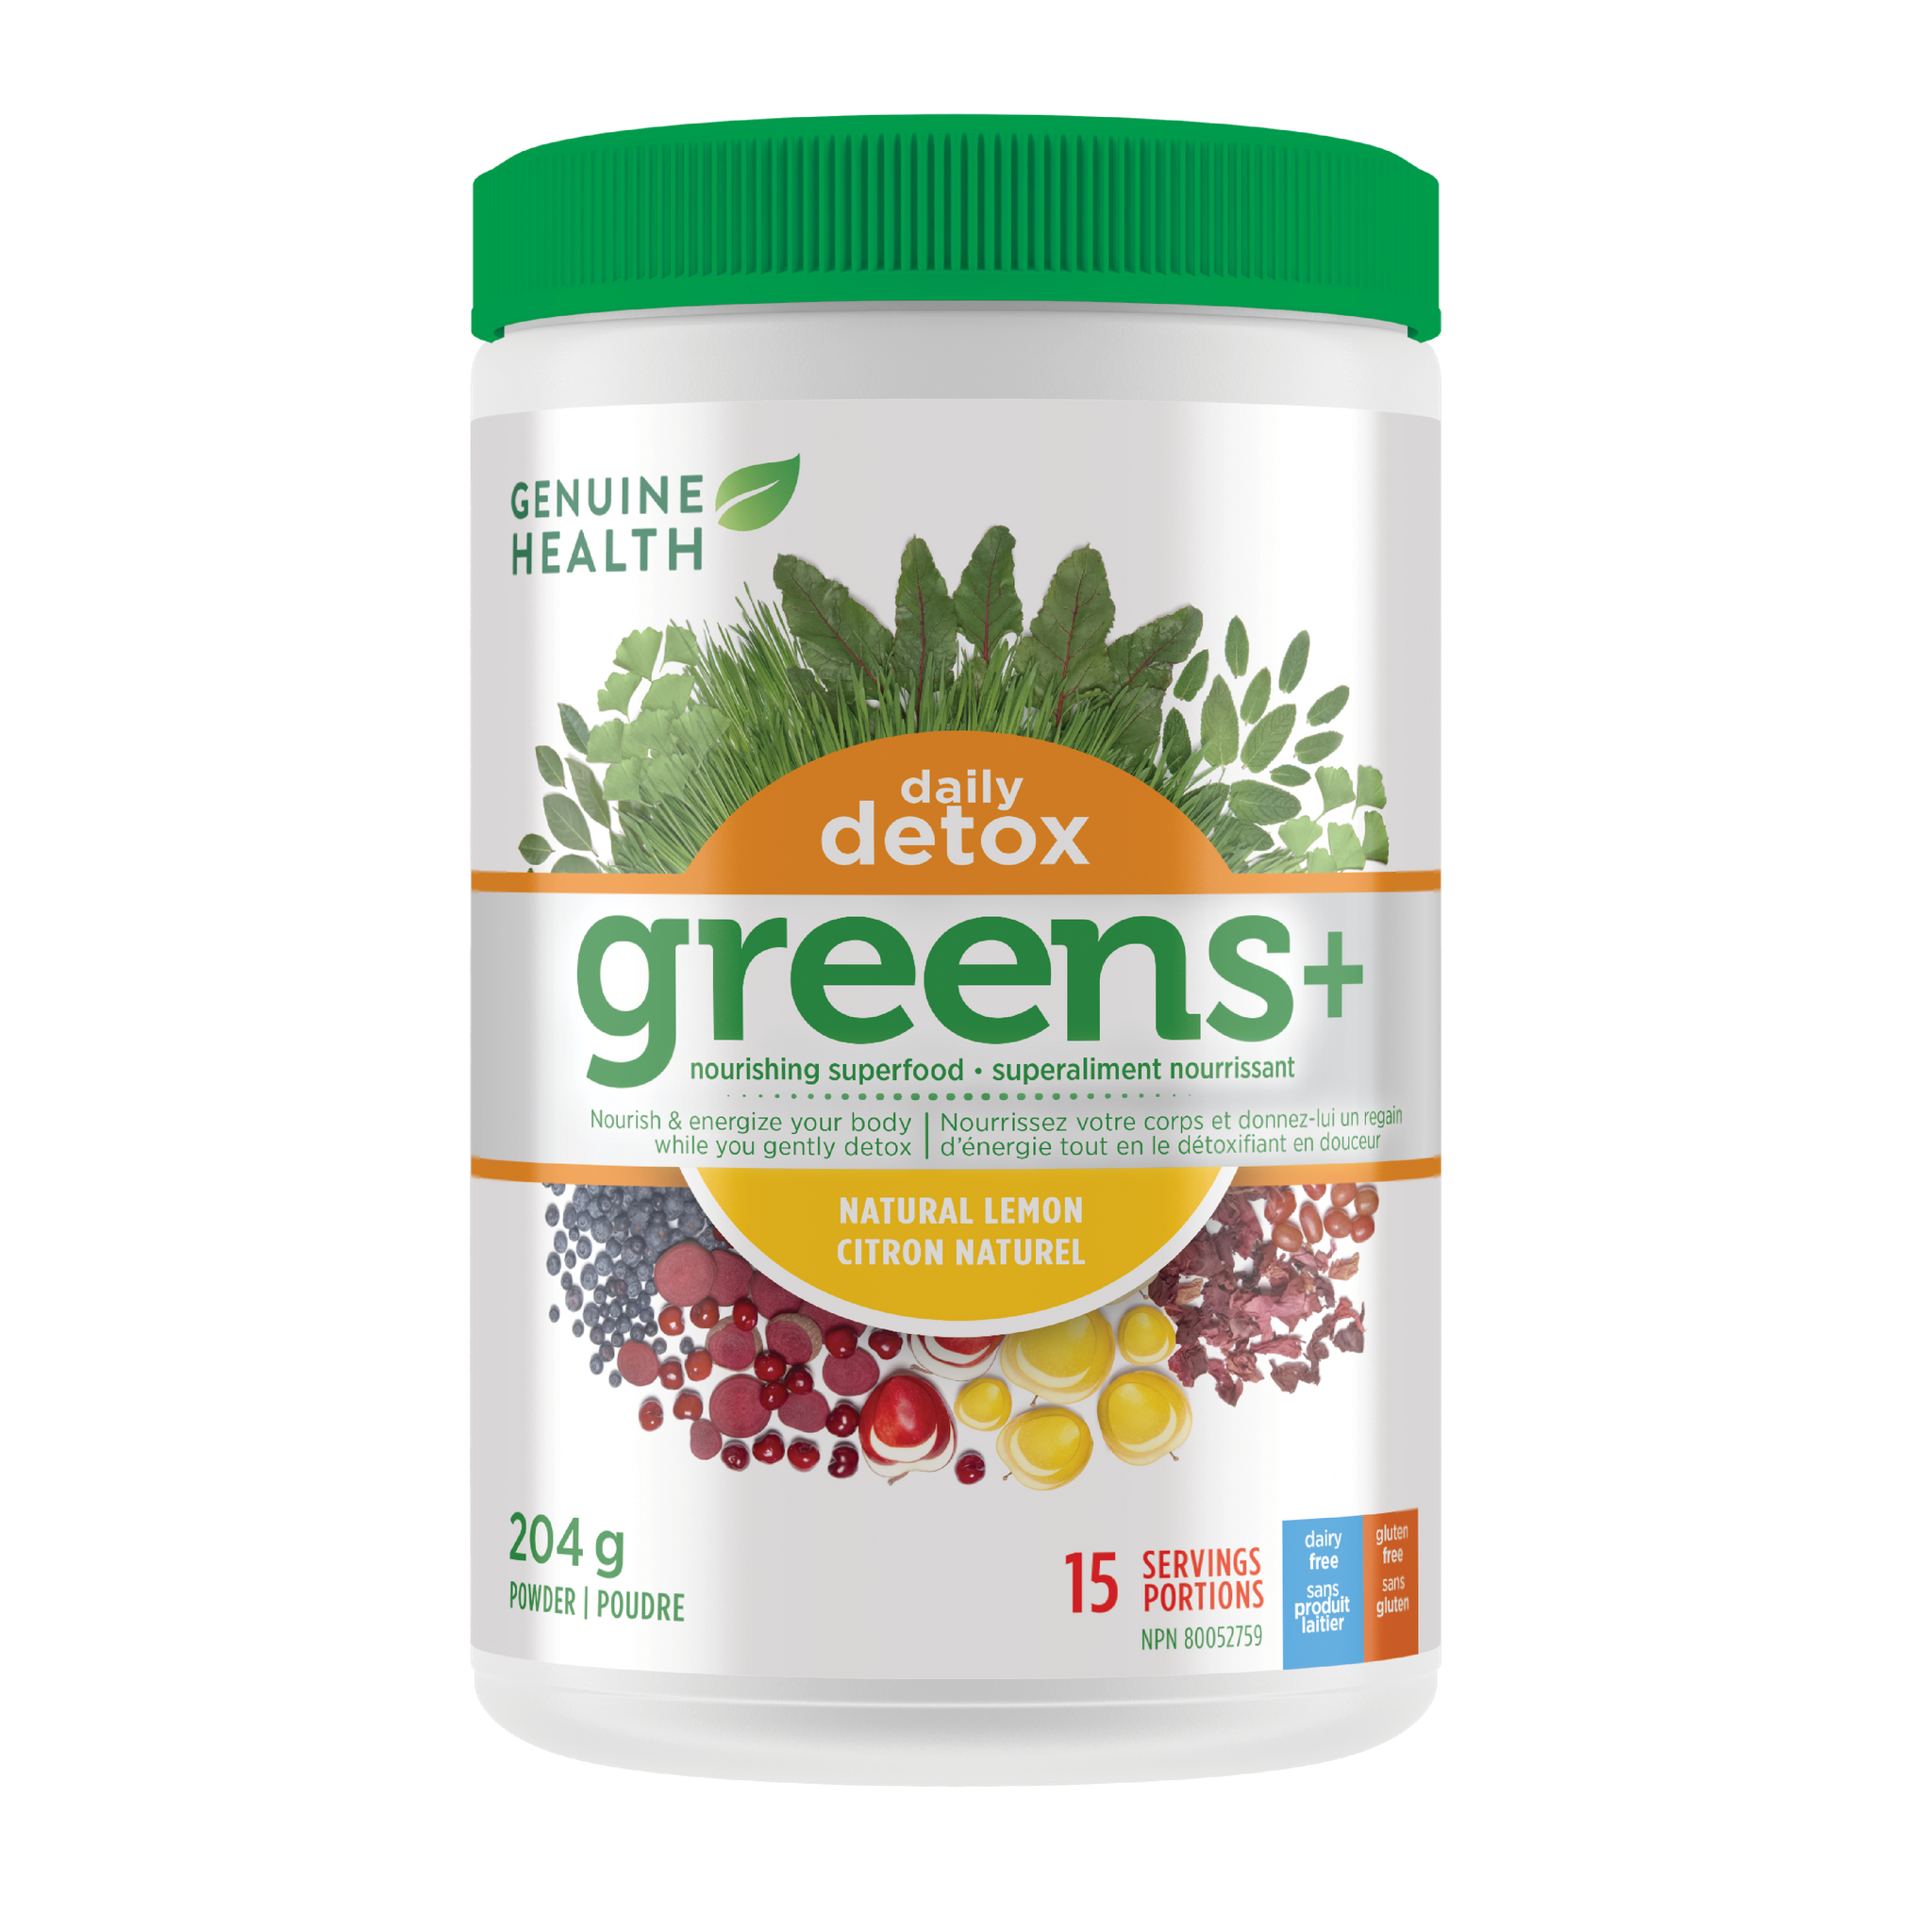 Genuine Health Greens+ Daily Detox Natural Lemon 204g